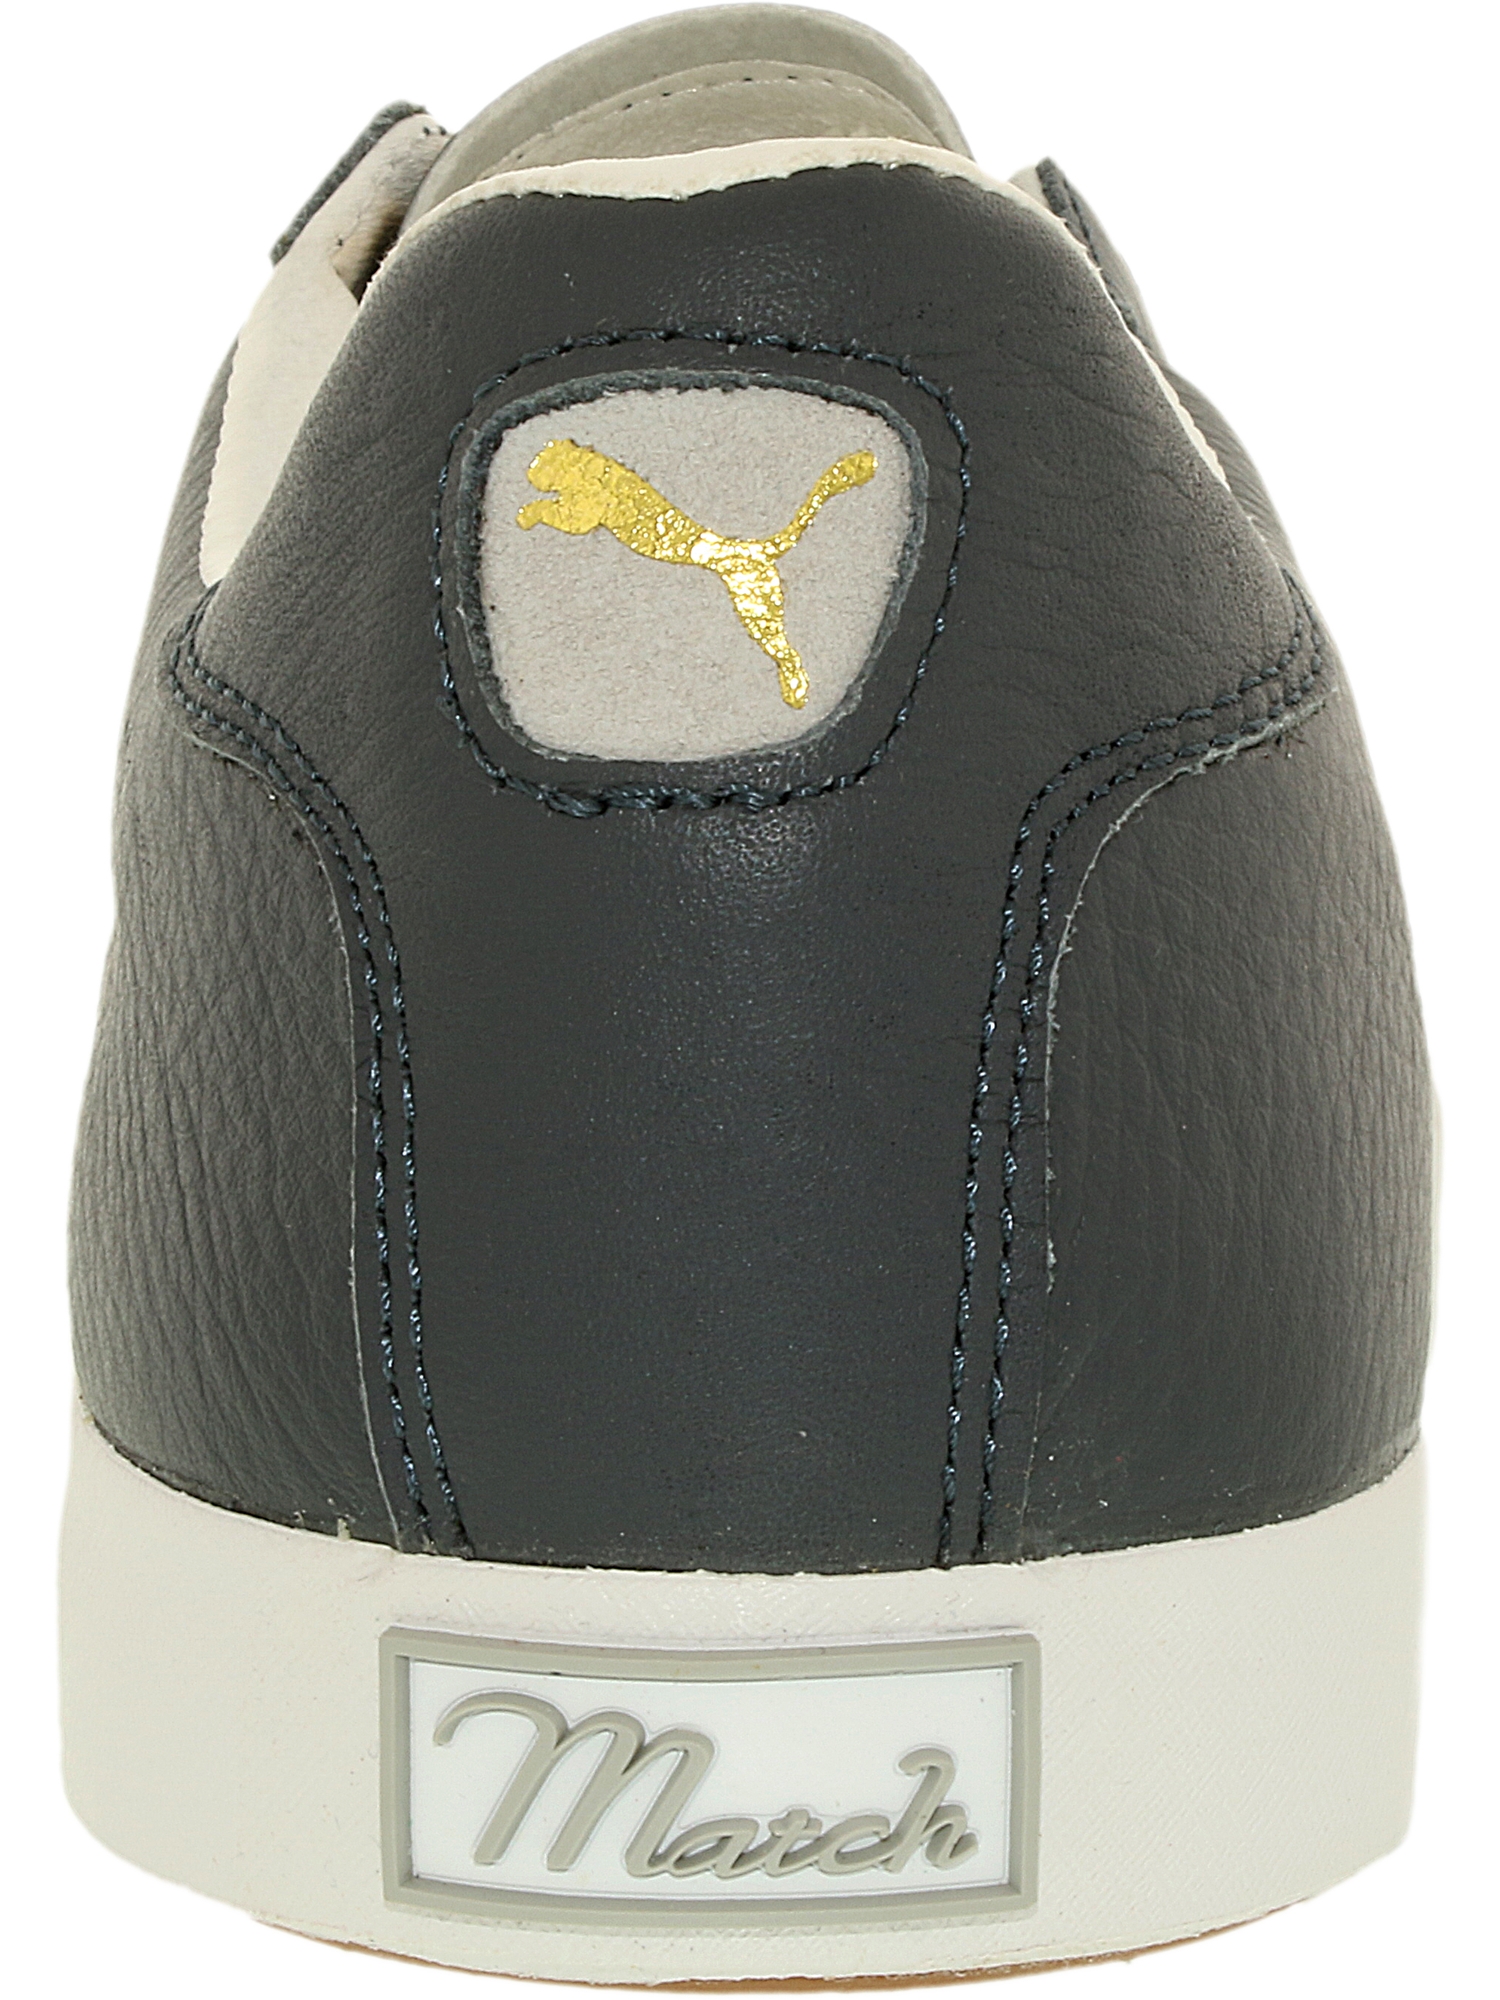 Puma Match Vulc Mens Gray Sneakers - image 3 of 3